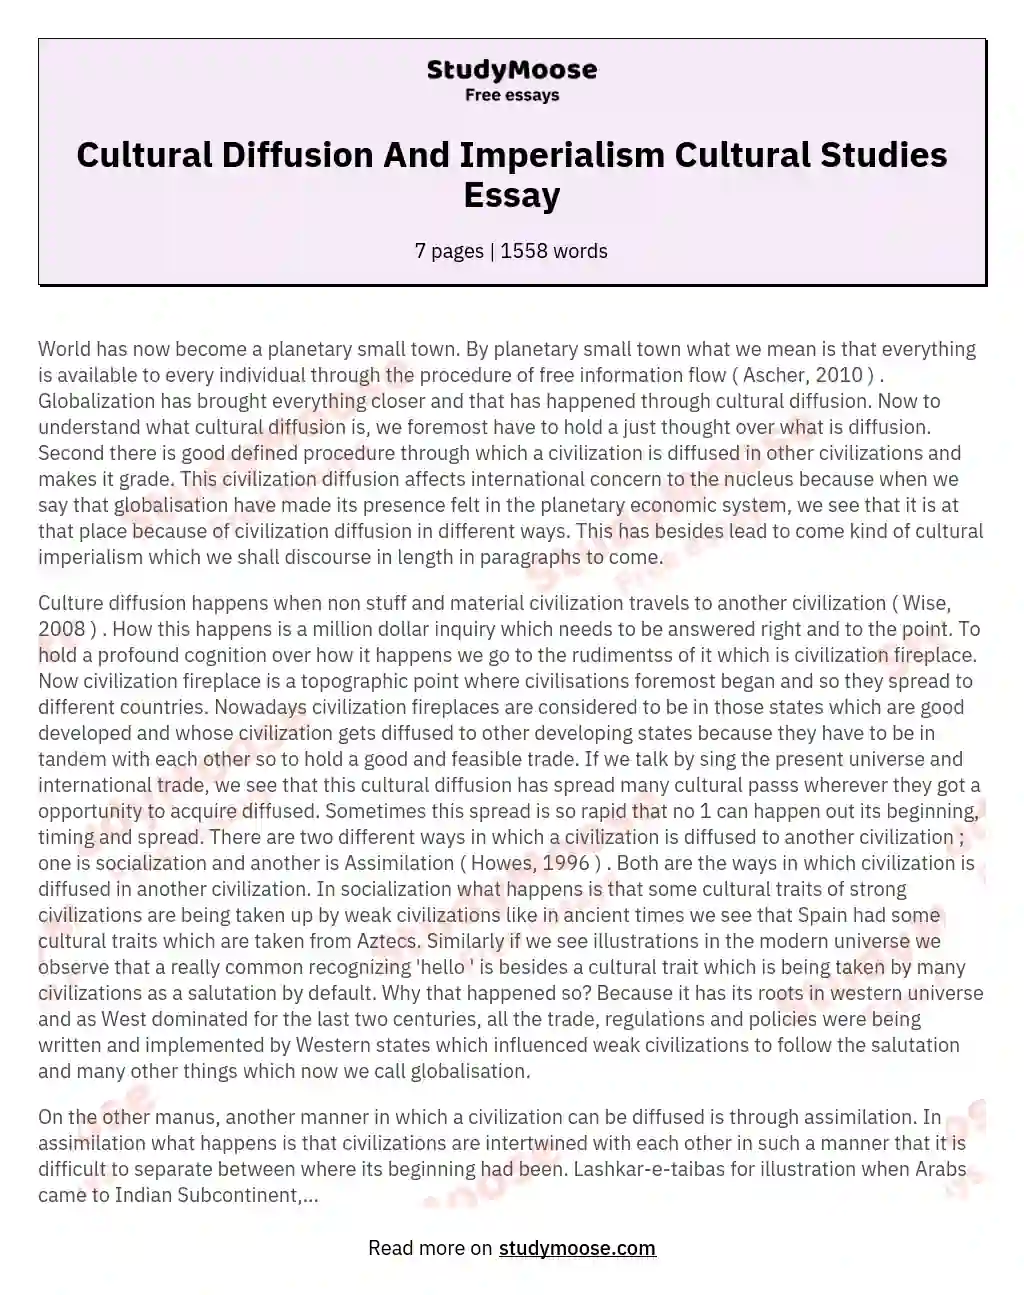 Cultural Diffusion And Imperialism Cultural Studies Essay